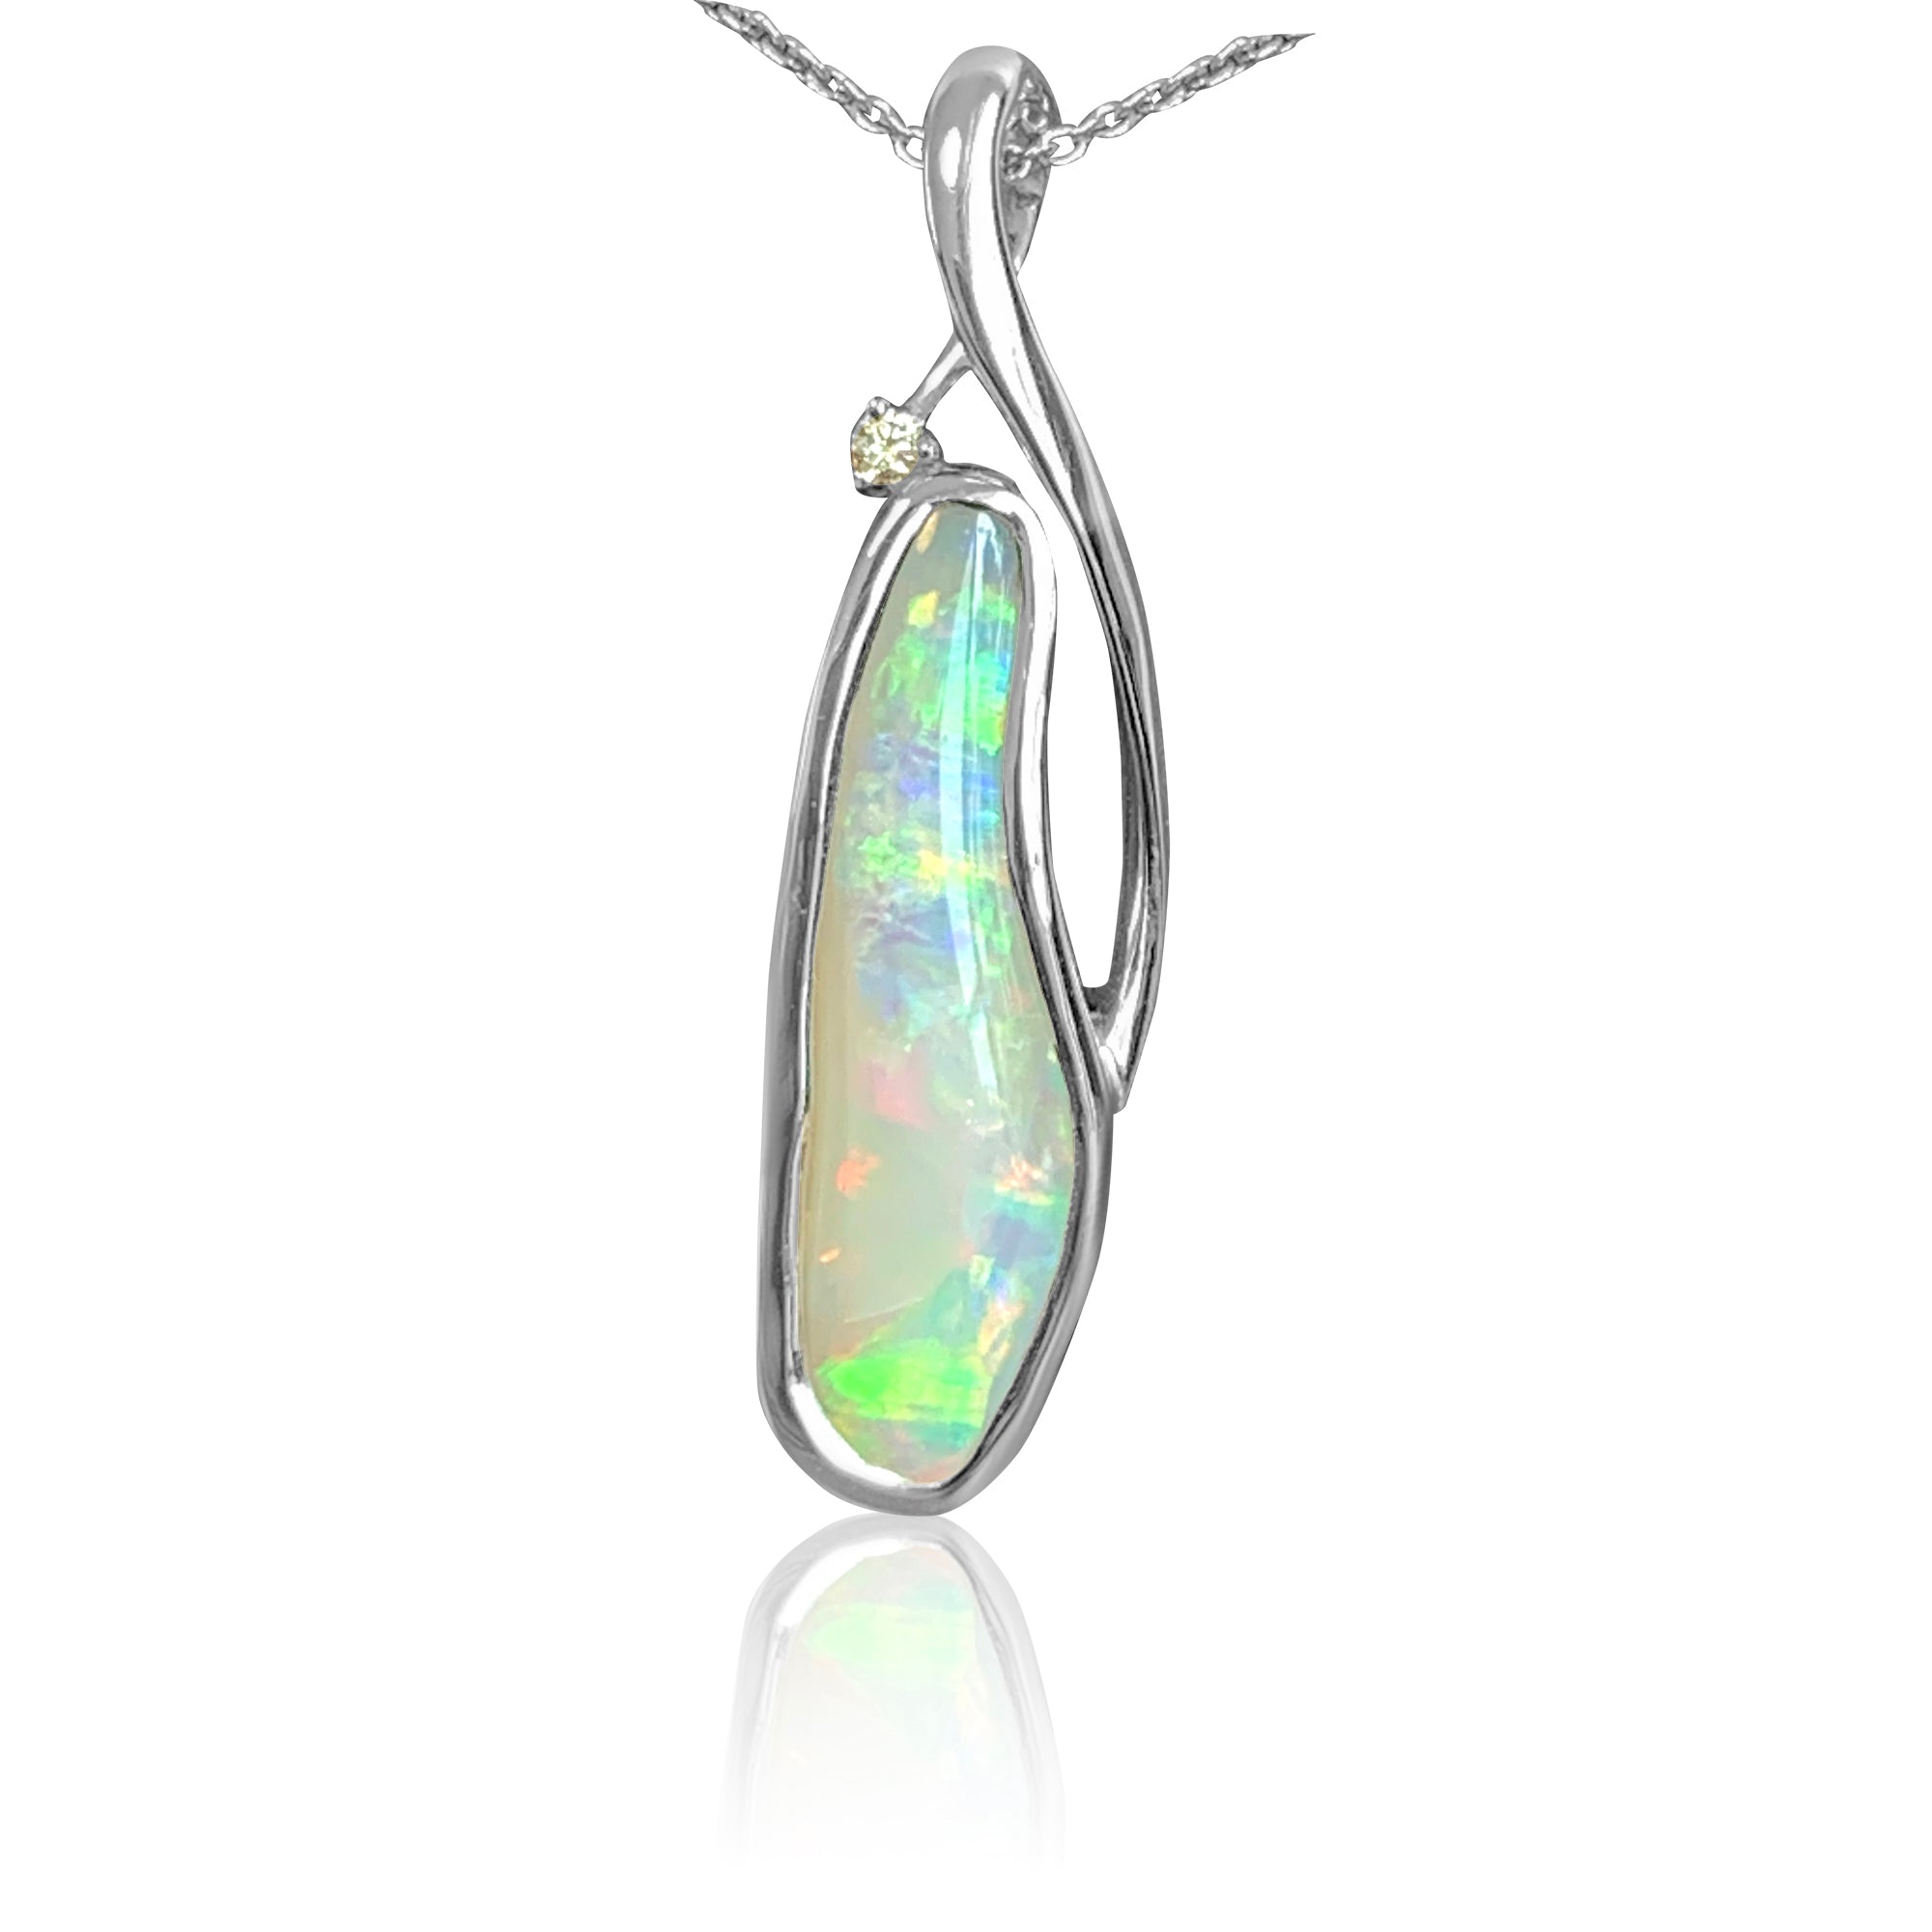 18kt White Gold Opal pendant - Masterpiece Jewellery Opal & Gems Sydney Australia | Online Shop